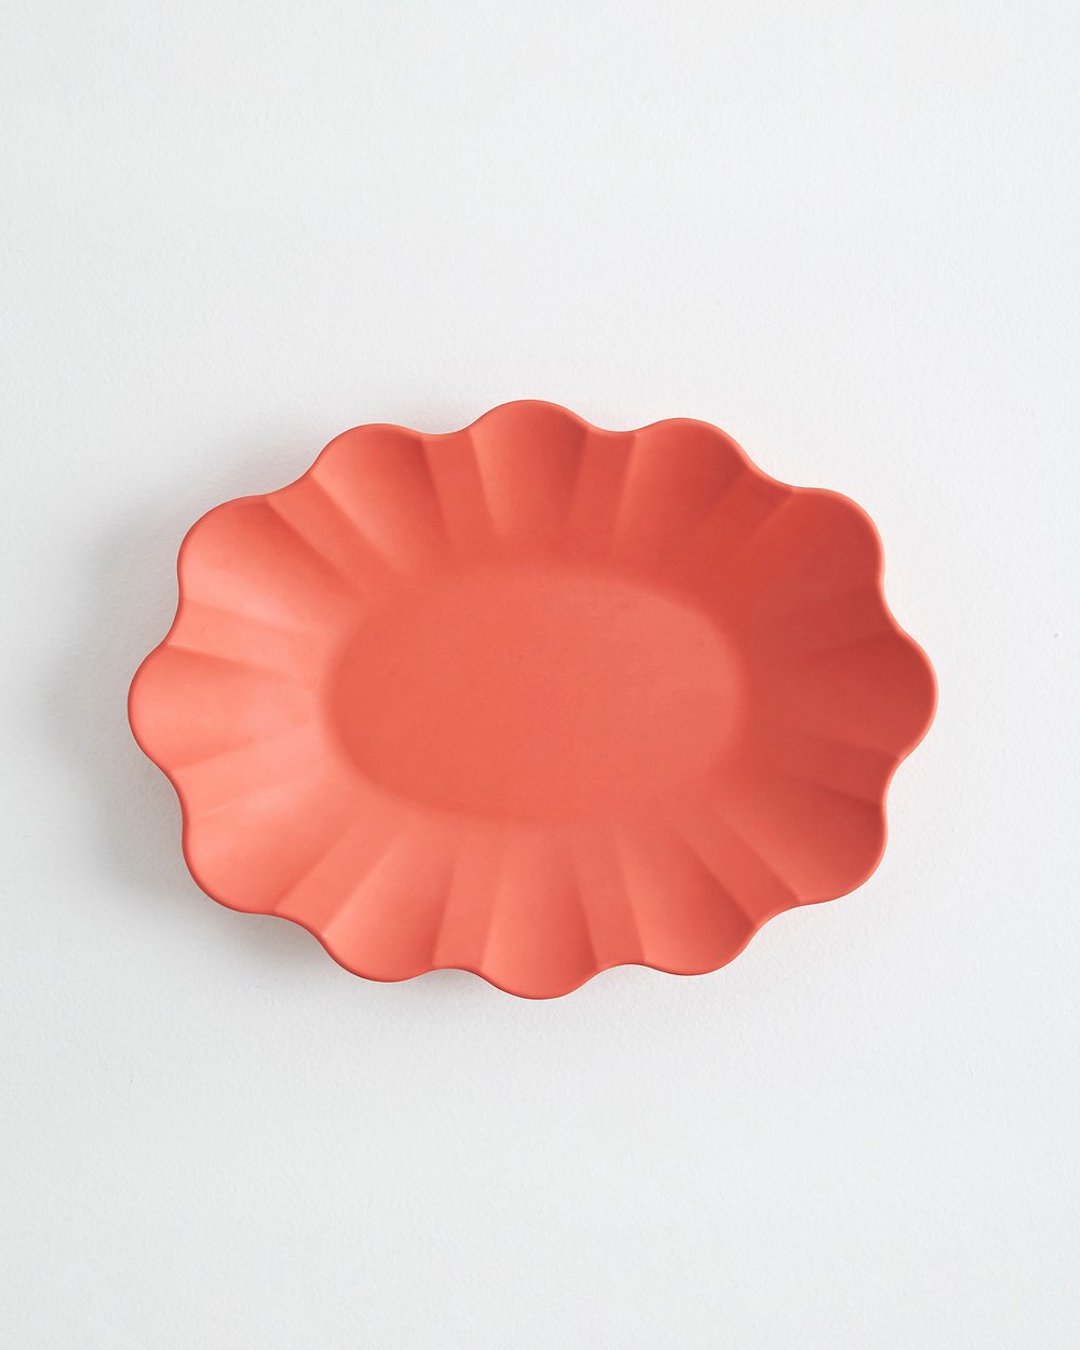 Housewarming gift idea - Maison Balzac platter